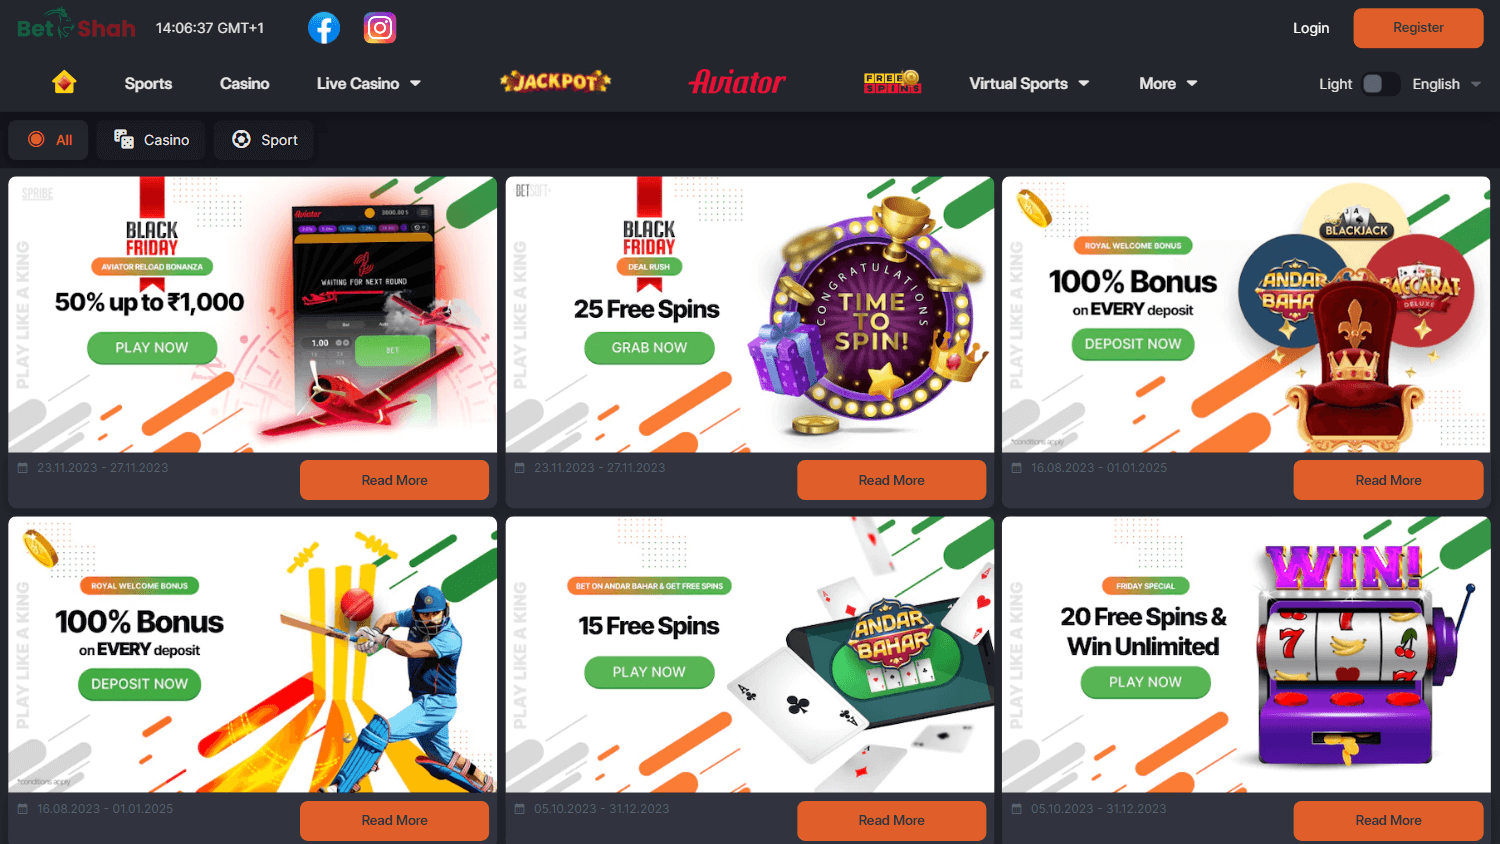 betshah_casino_promotions_desktop